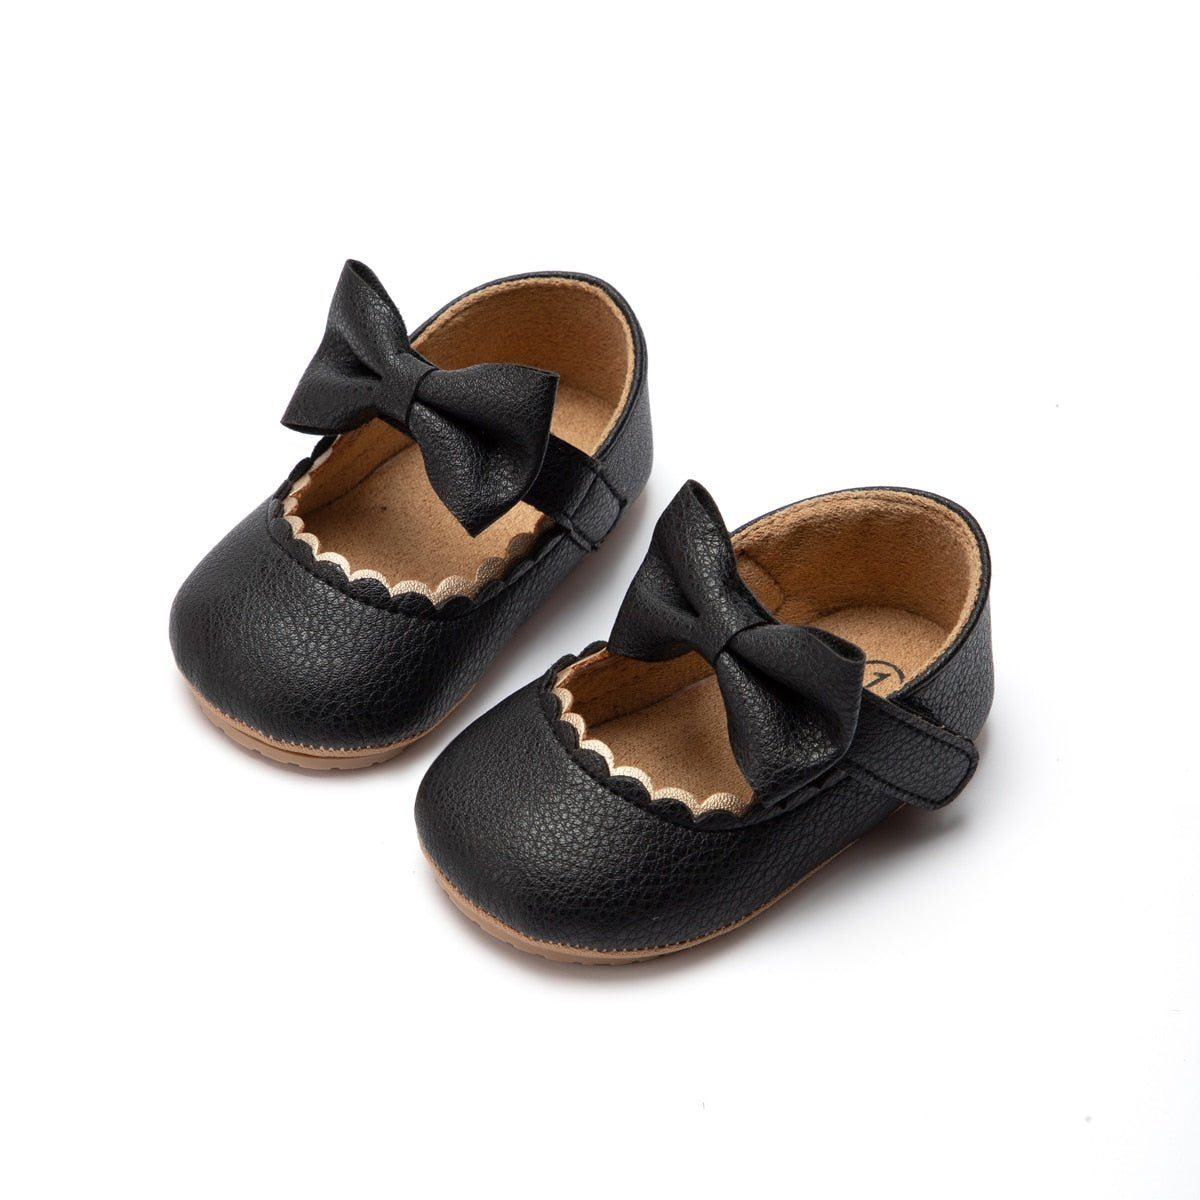 Classic Newborn Baby Girl Shoes Classic Newborn Baby Girl Shoes Baby Bubble Store Black 7-12 Months 